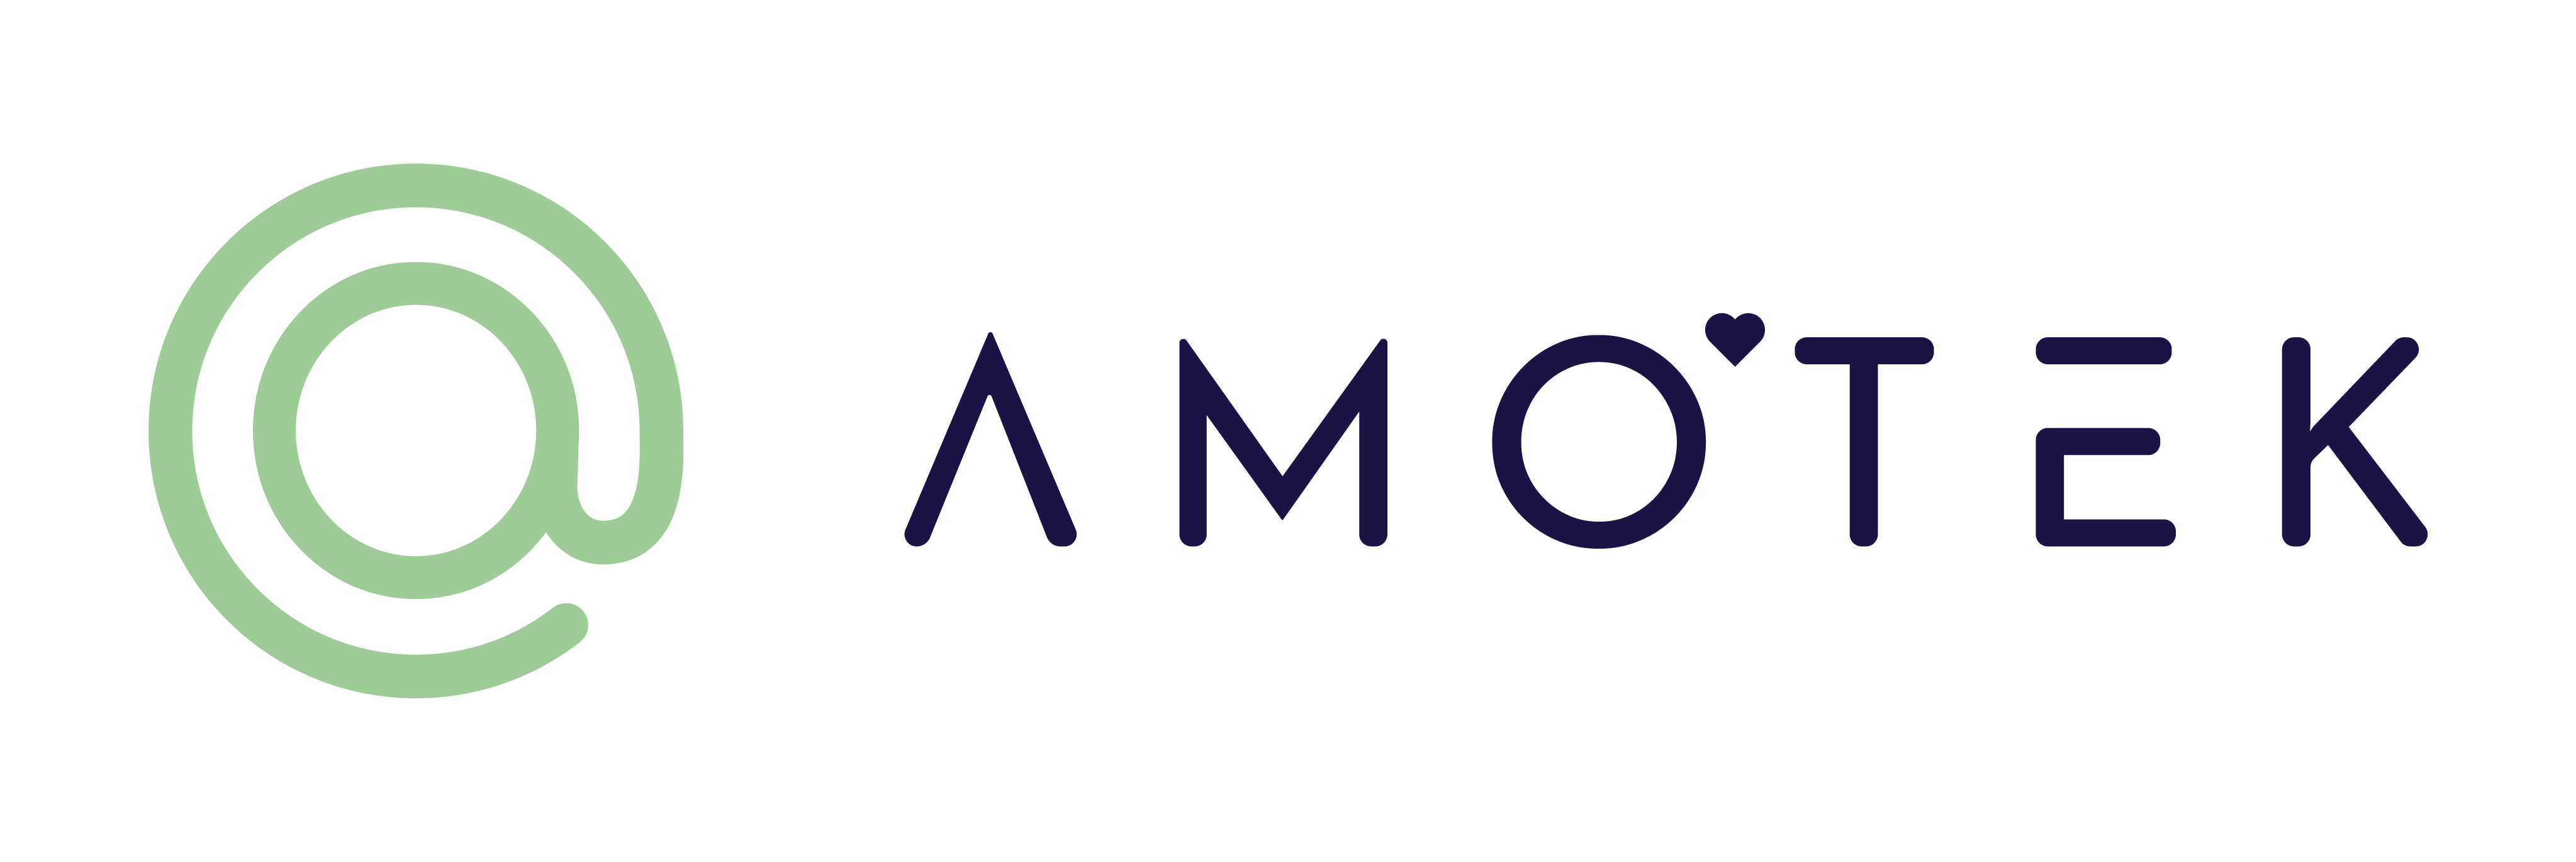 Amotek logo